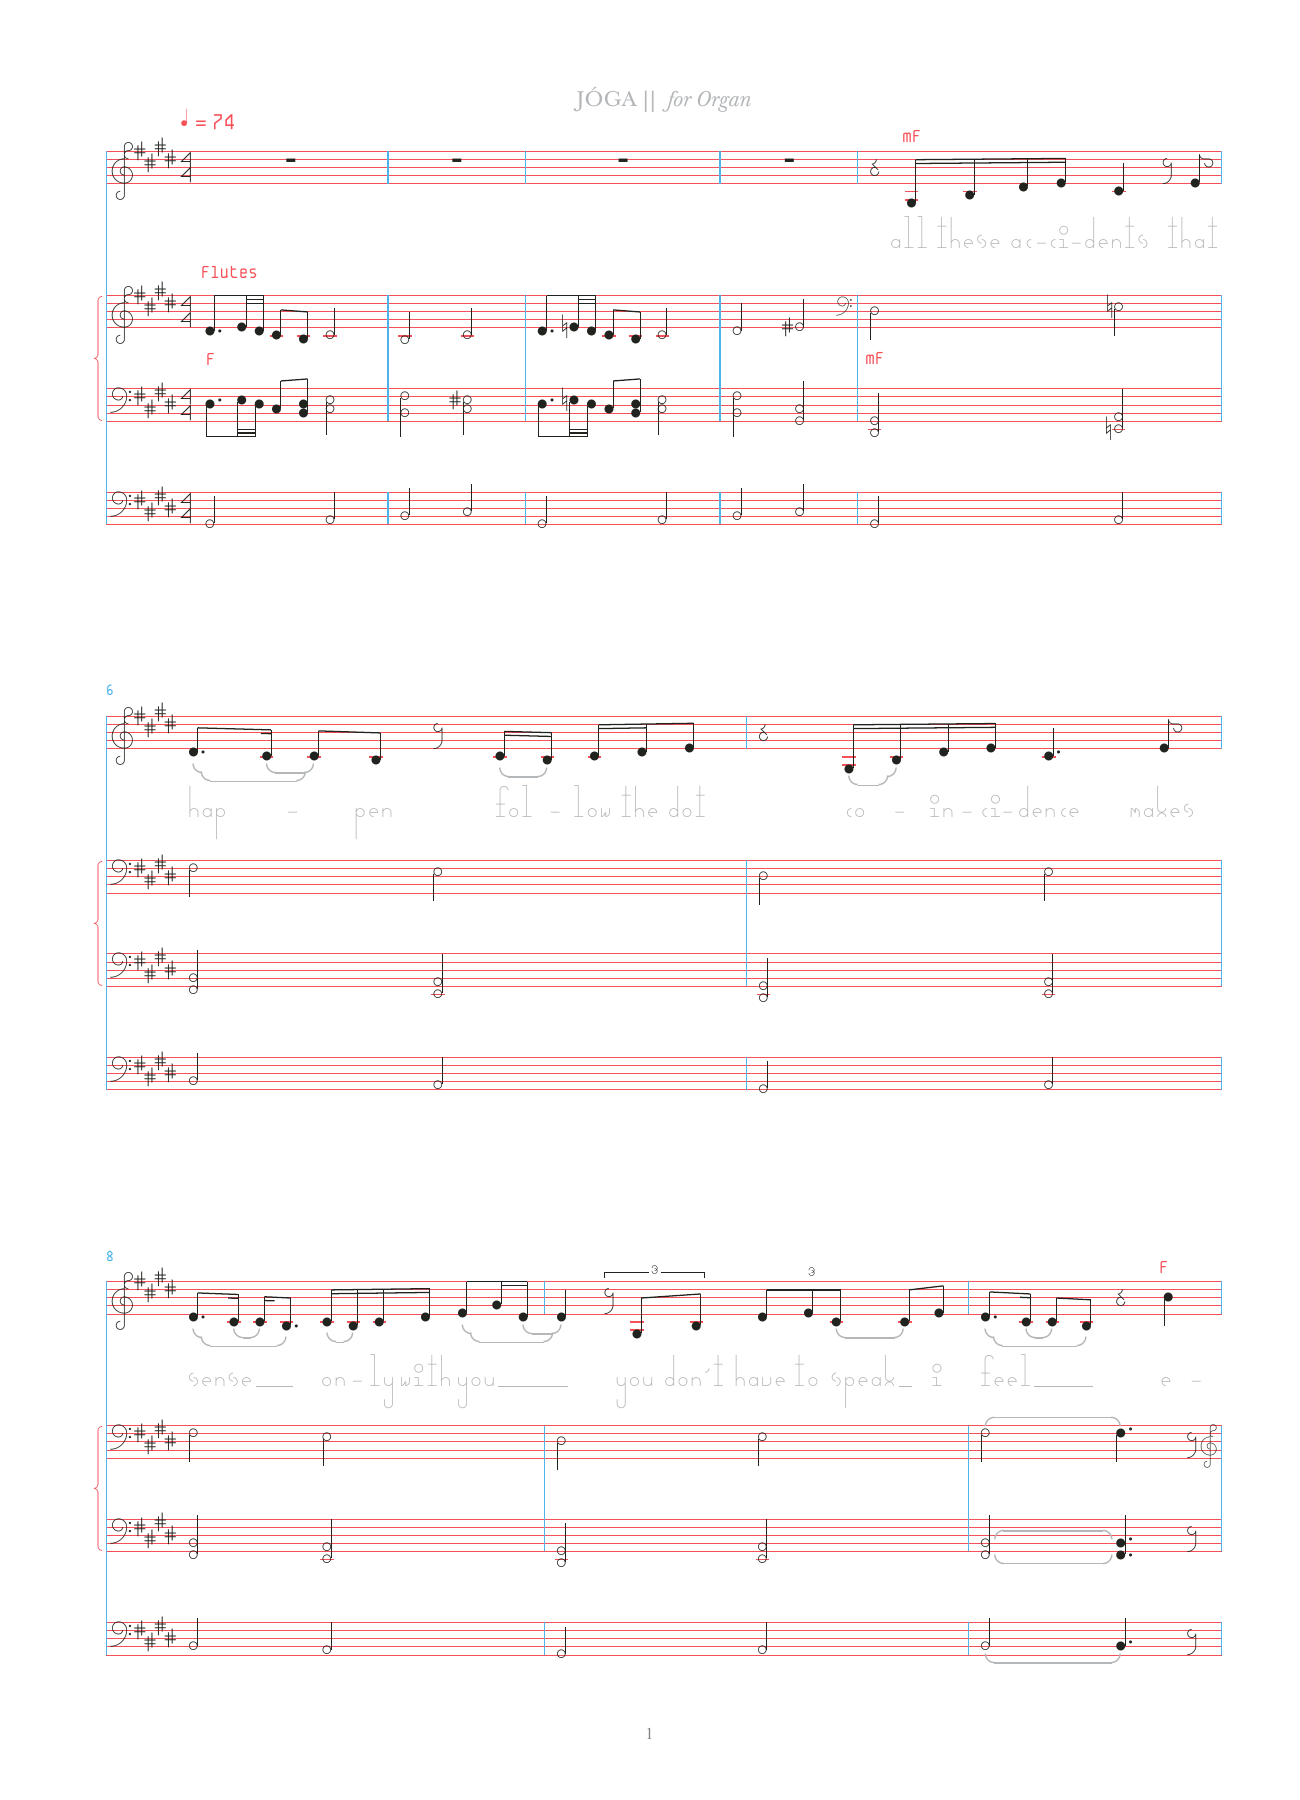 Bjork Joga Sheet Music Notes & Chords for Organ & Vocal - Download or Print PDF